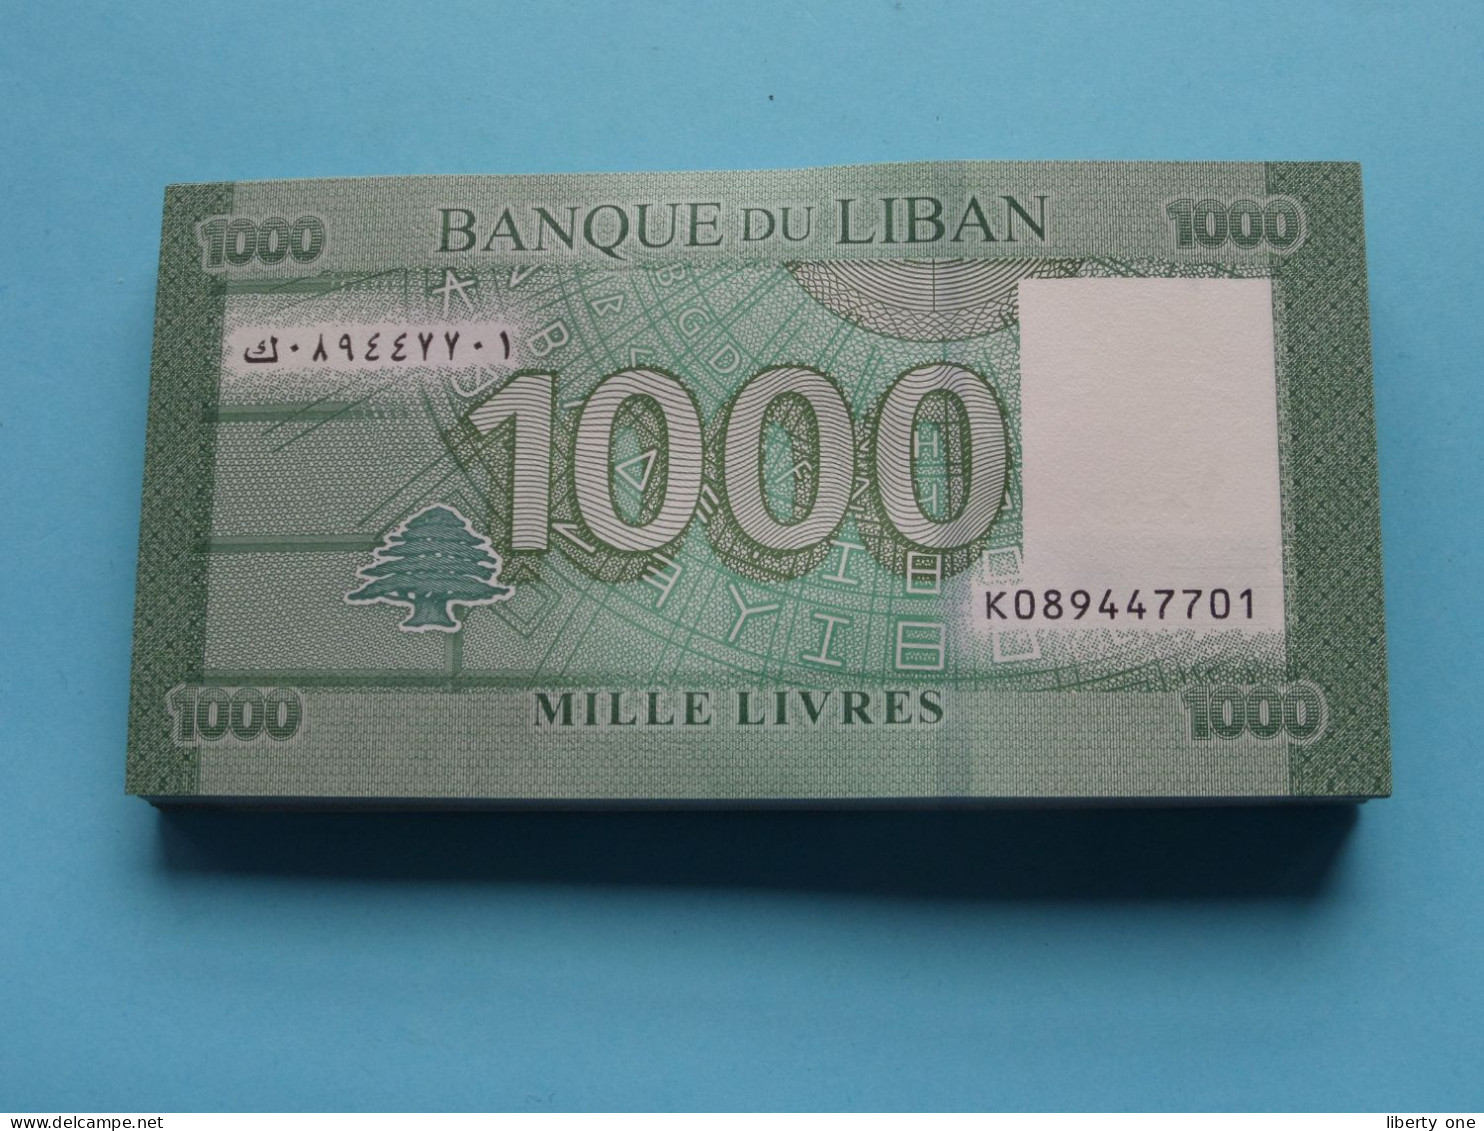 1000 Livres Mille ( Banque De Liban ) Lebanon 2016 ( For Grade, Please See SCANS ) UNC ! - Libanon